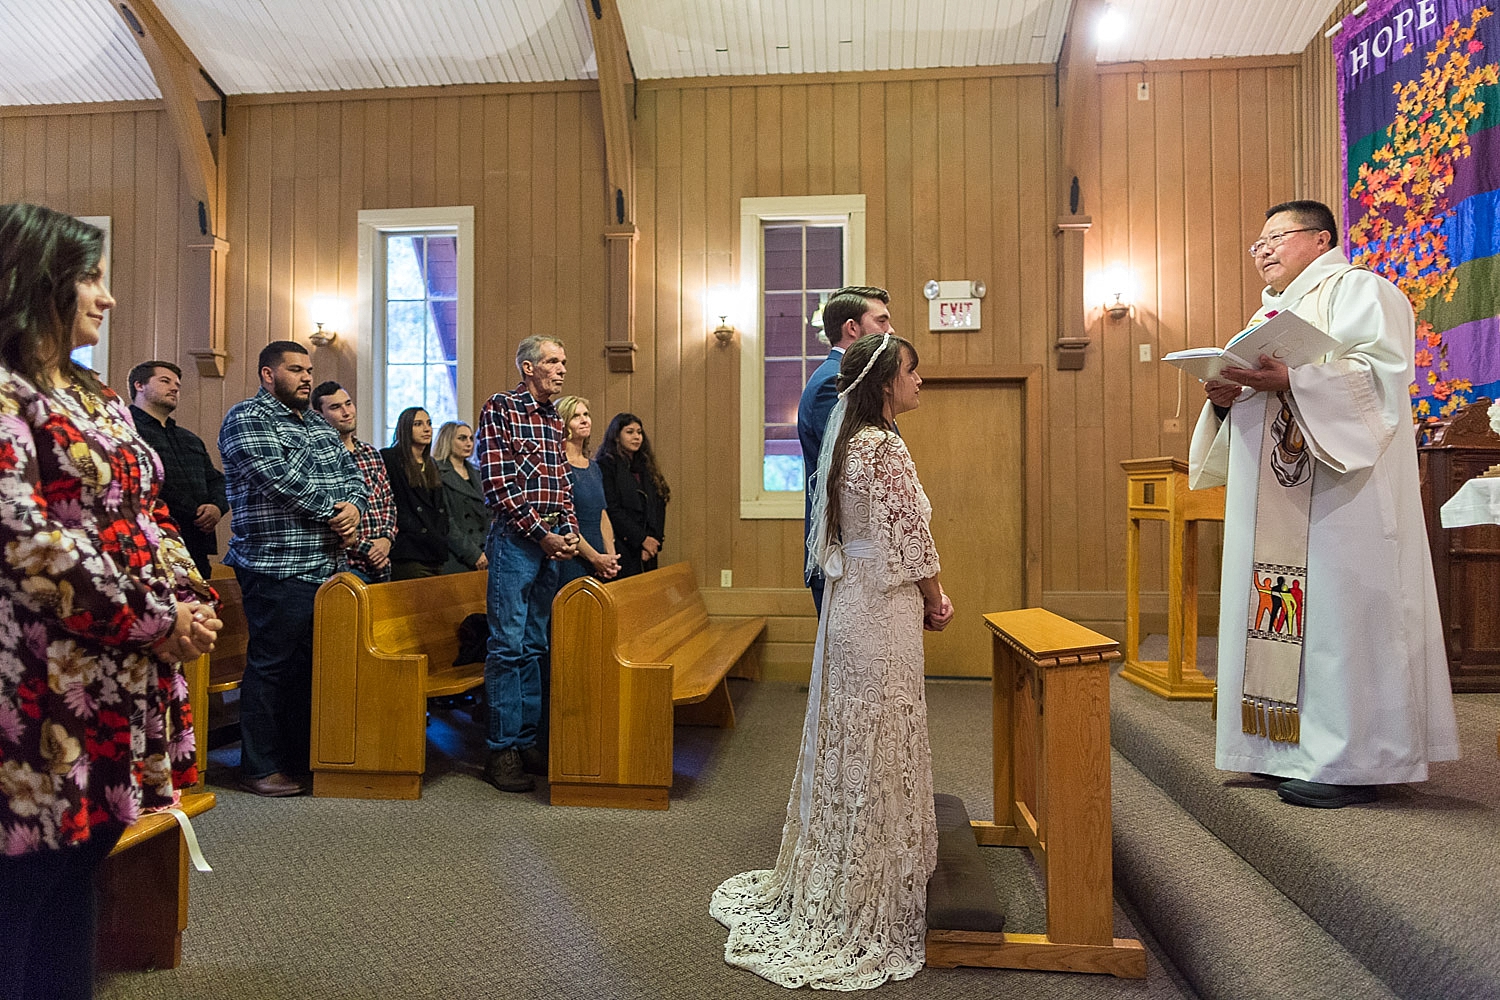 Yosemite Chapel wedding ceremony